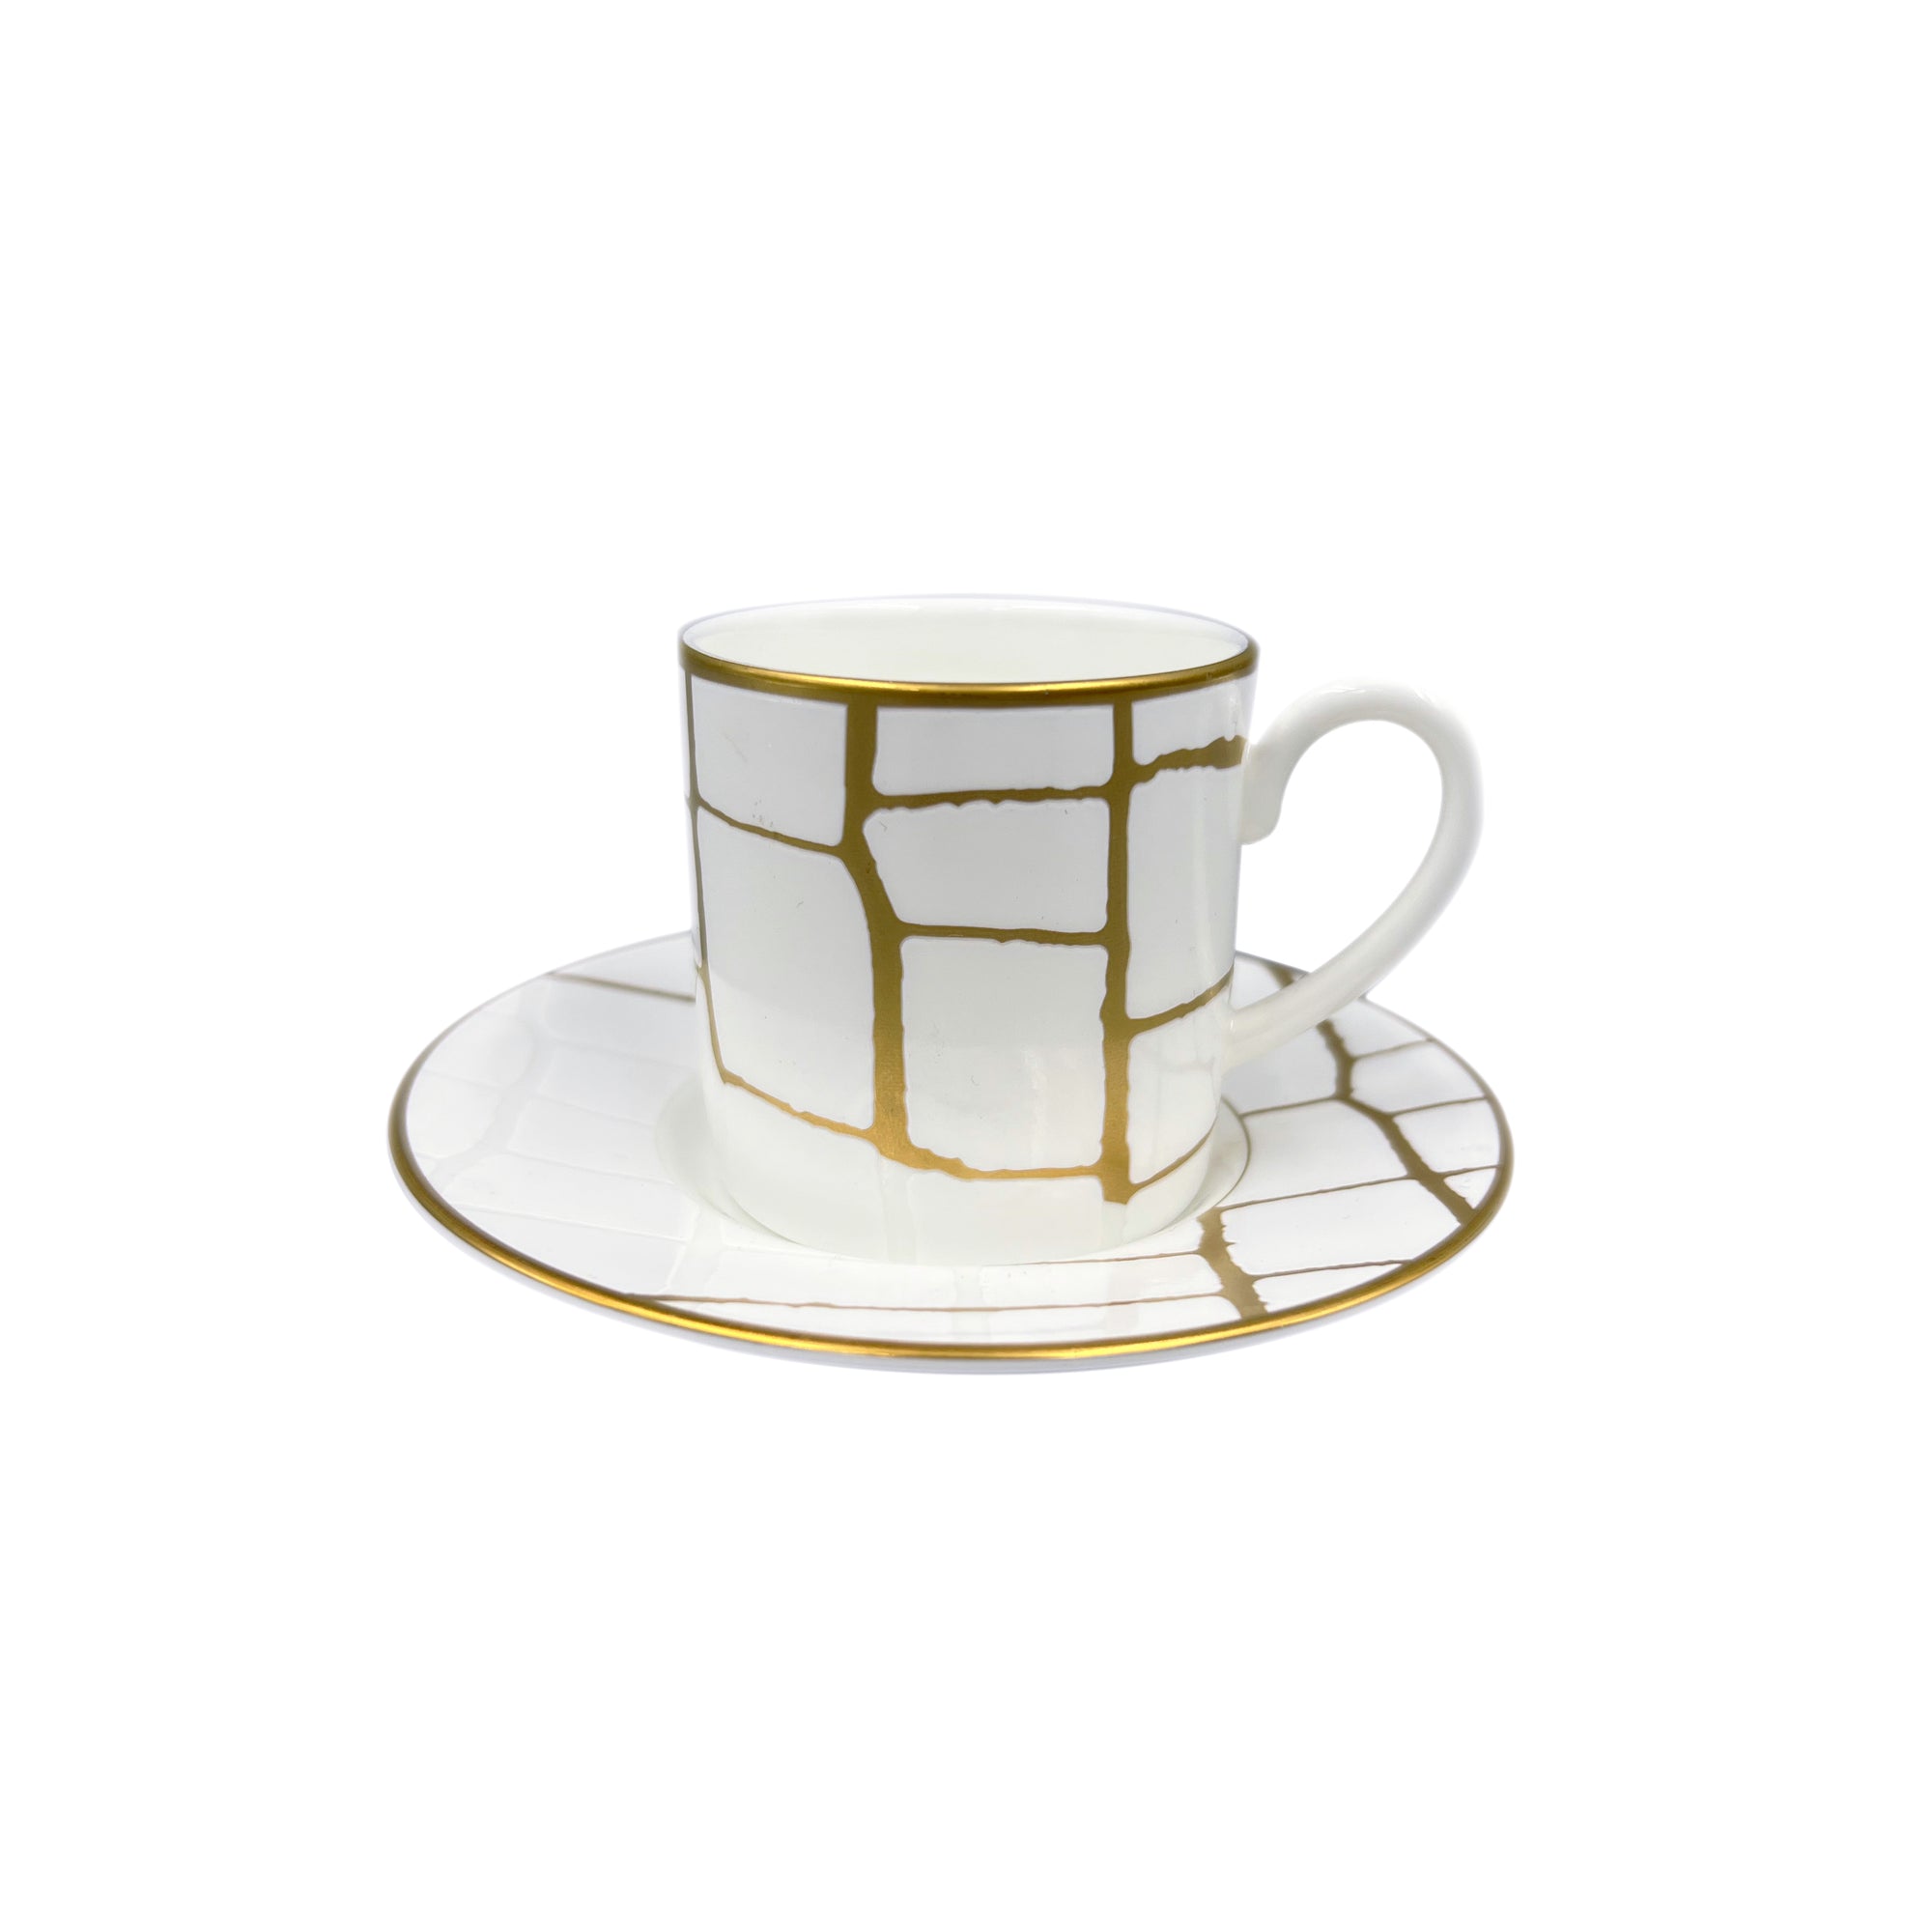 Prouna Prouna Alligator Gold Espresso Cup & Saucer White Background Photo